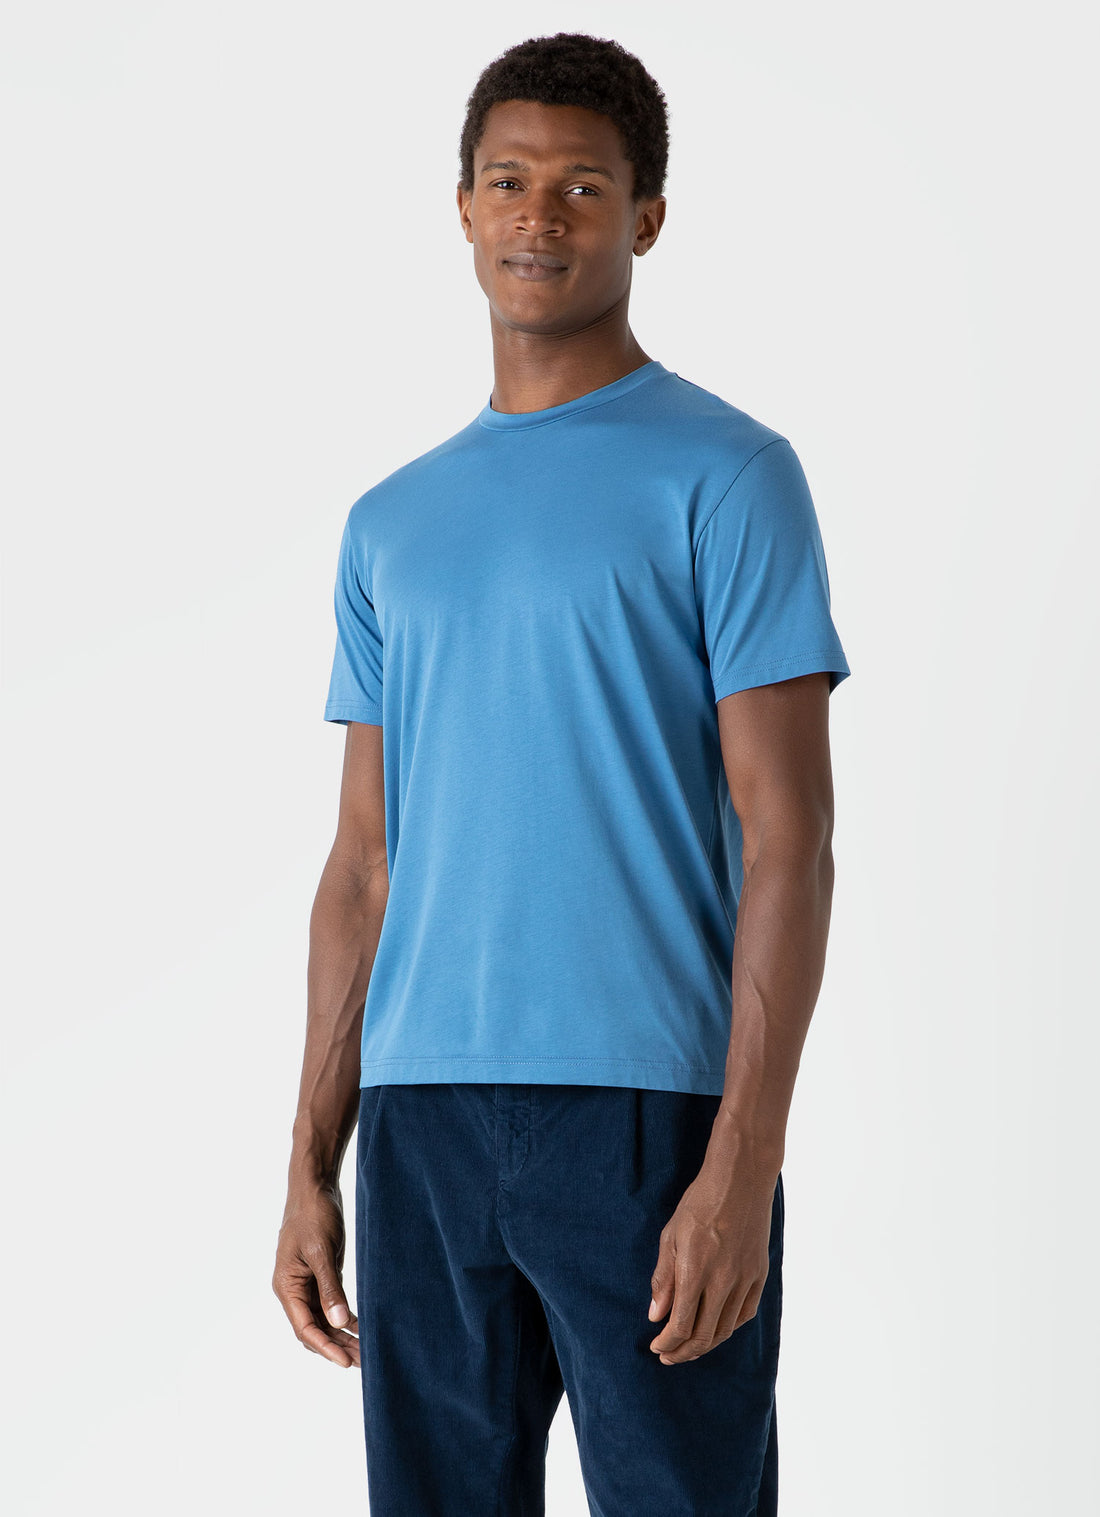 Men's Riviera Midweight T-shirt in Blue Jean